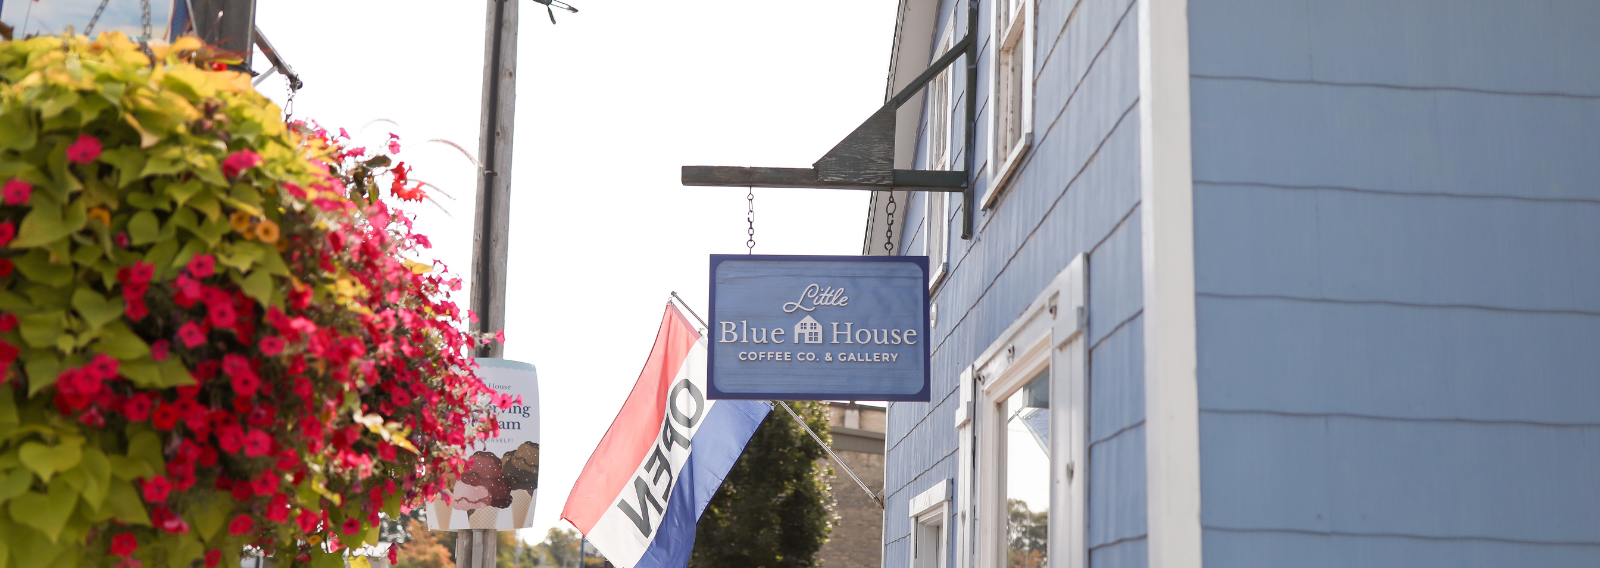 Little Blue House Coffee